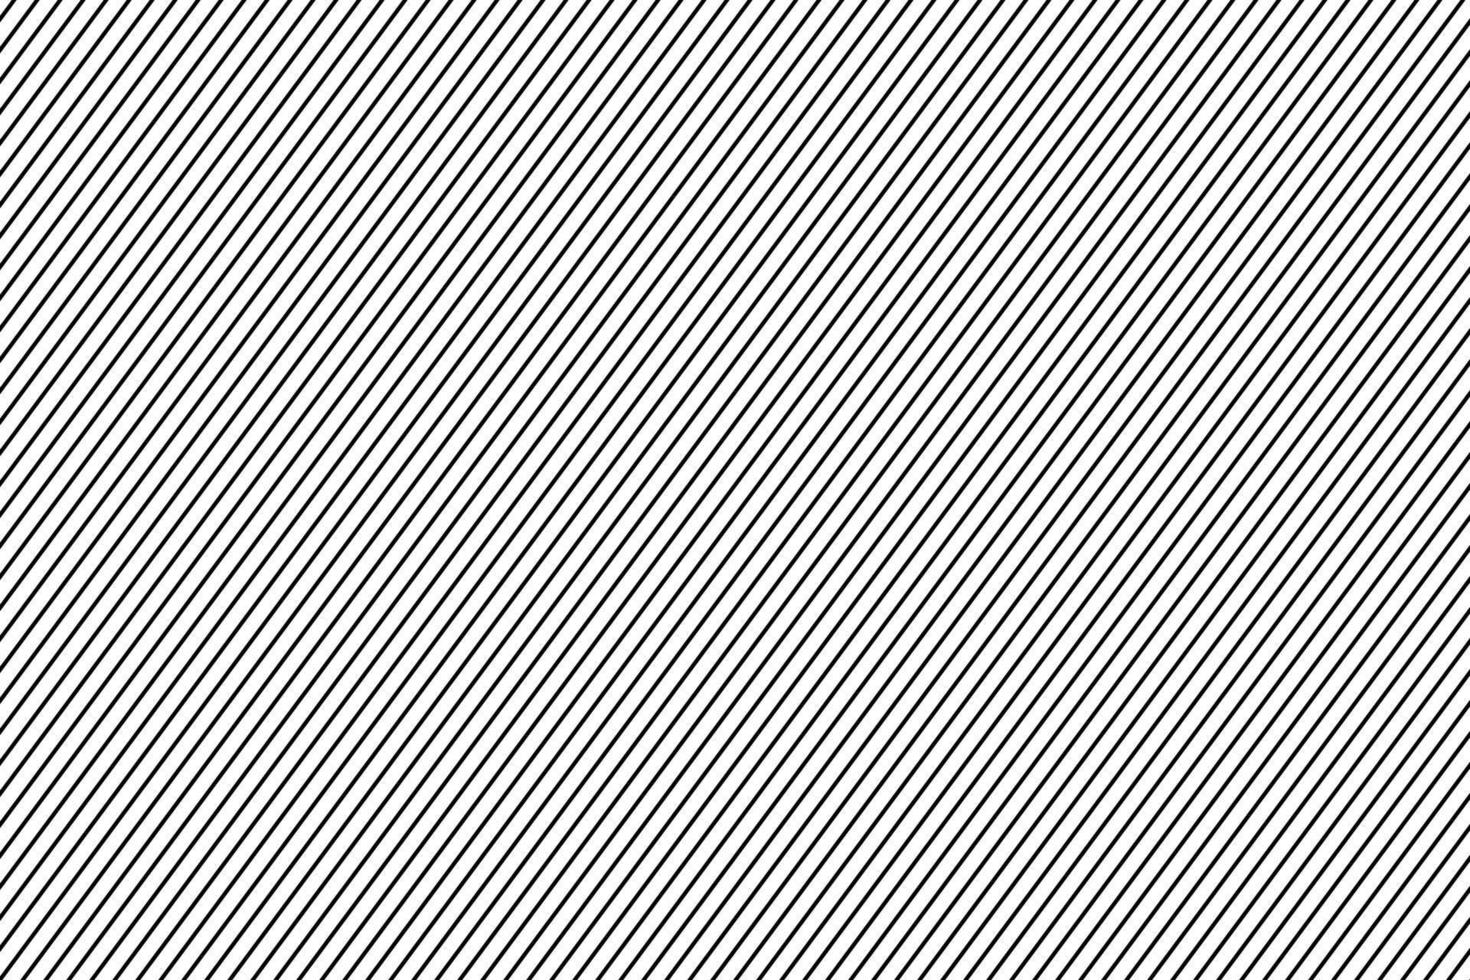 black diagonal stripe straight lines pattern. vector